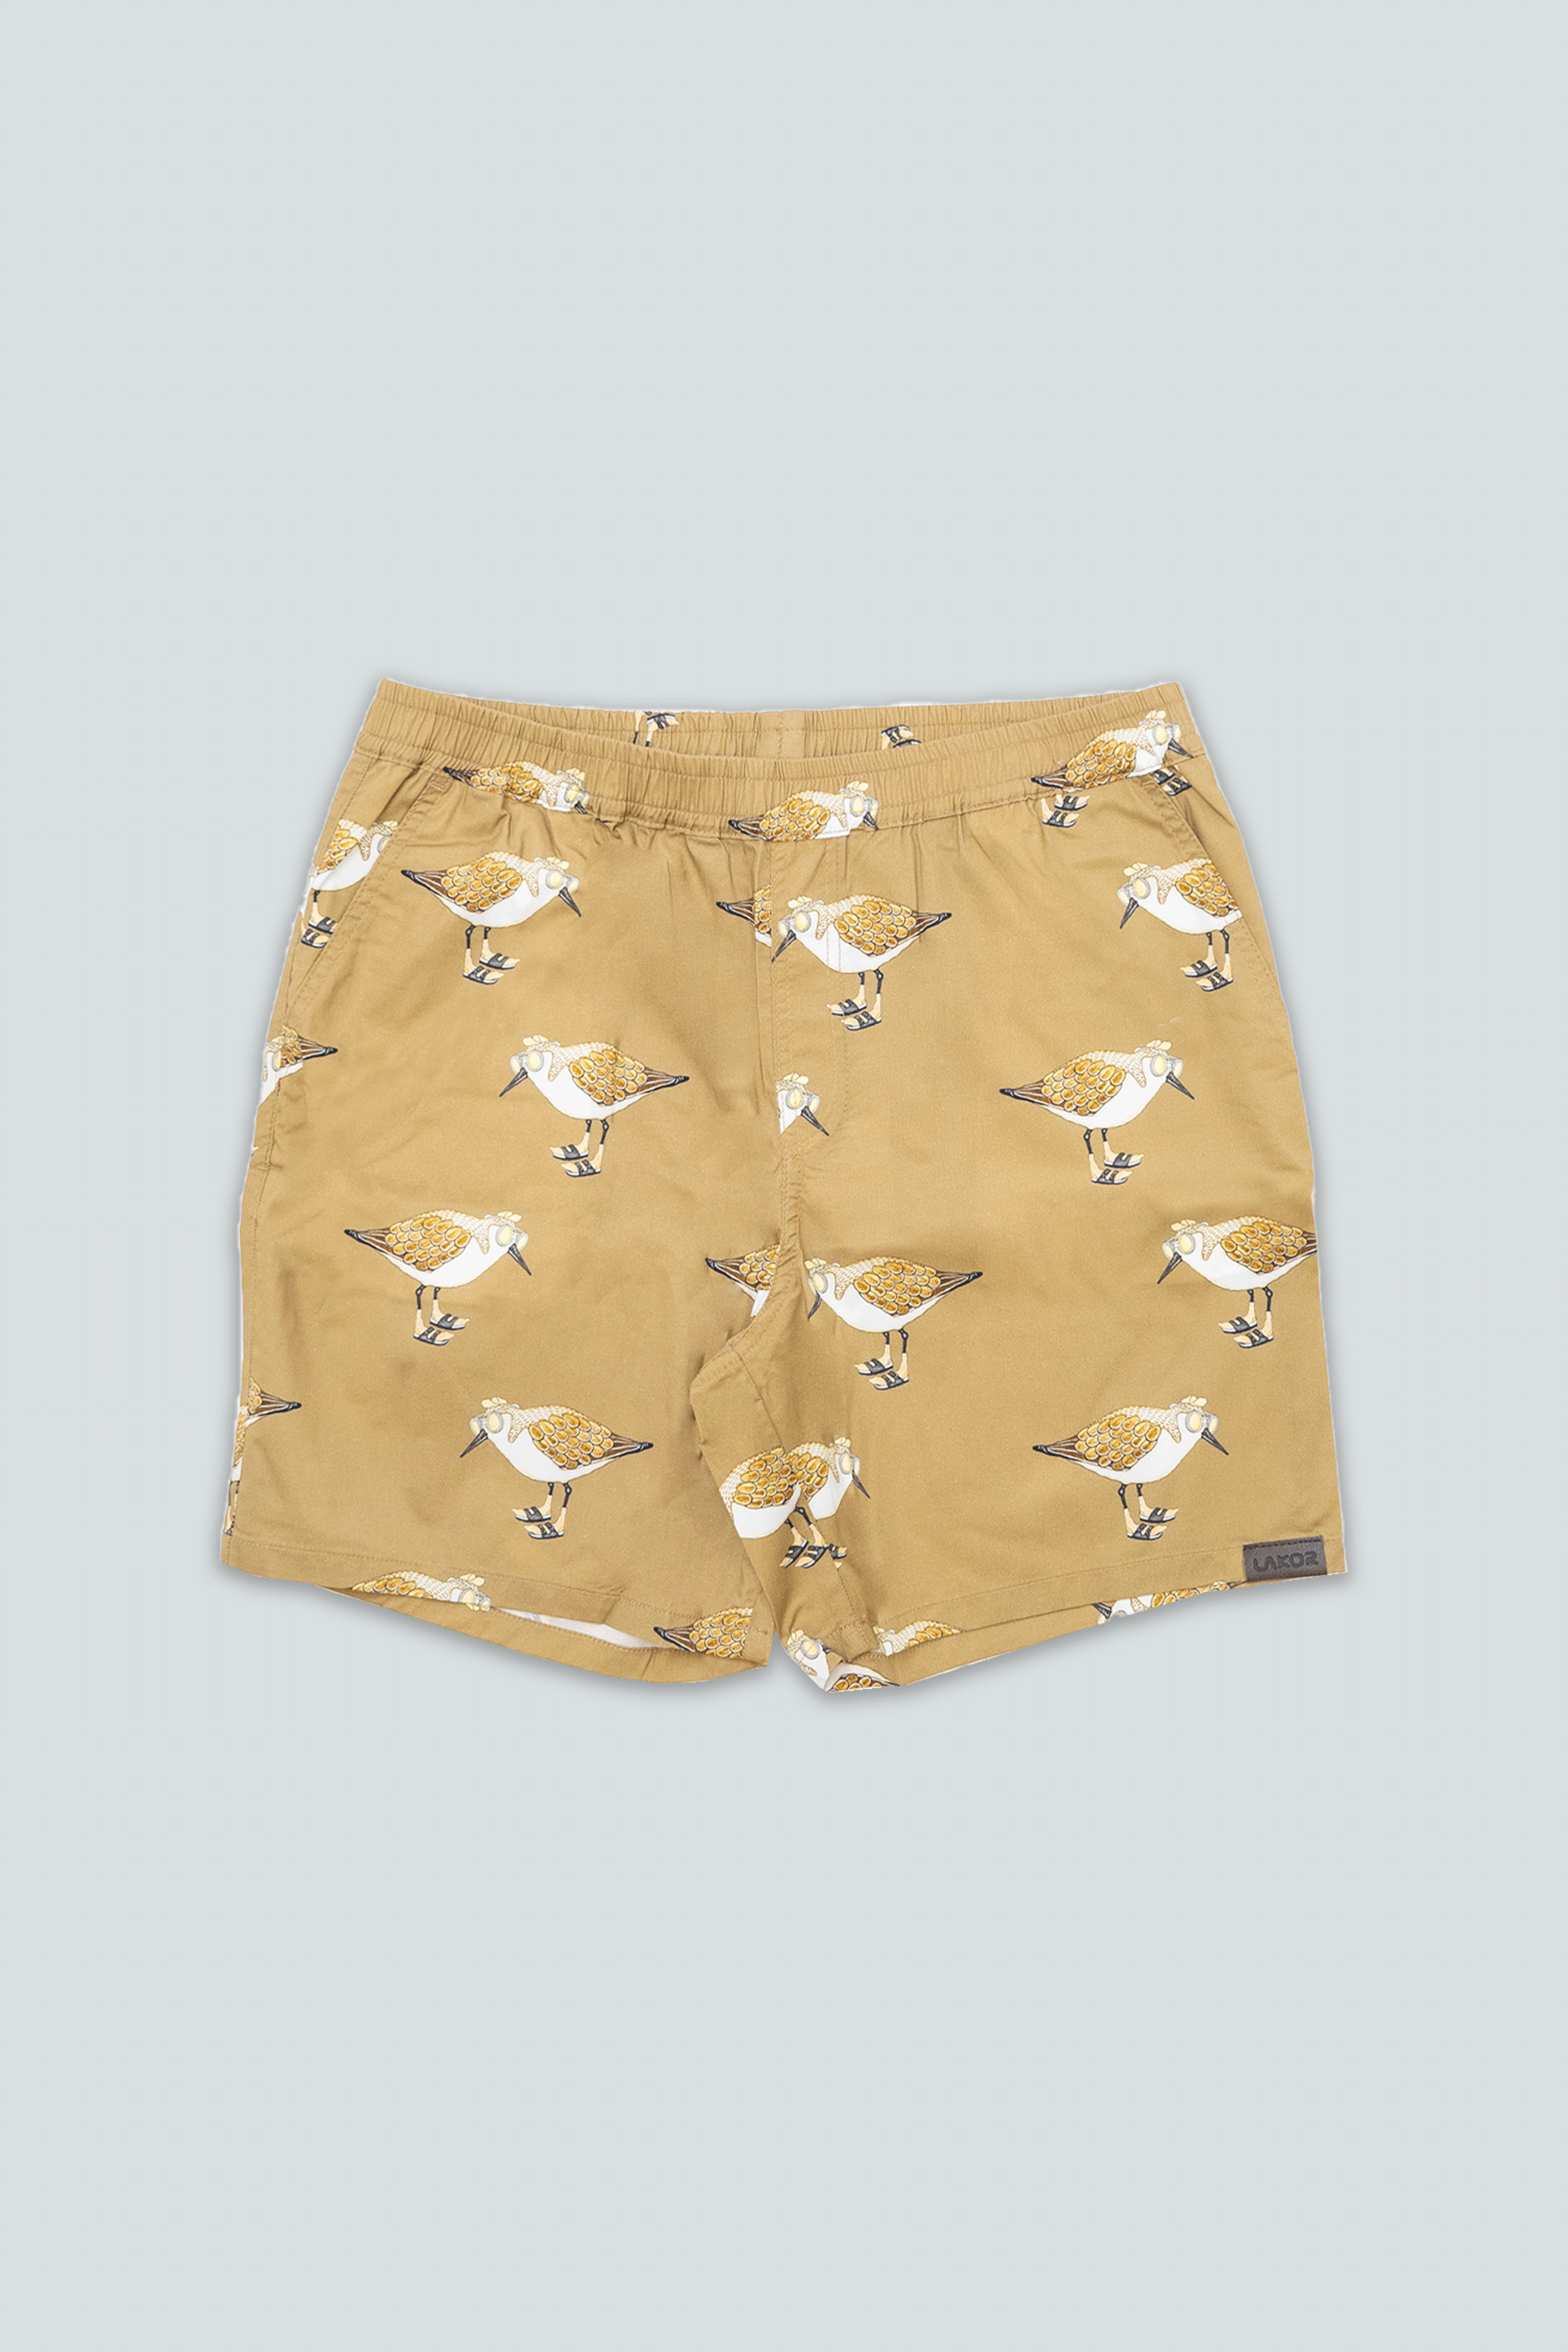 Sandpiper Shorts